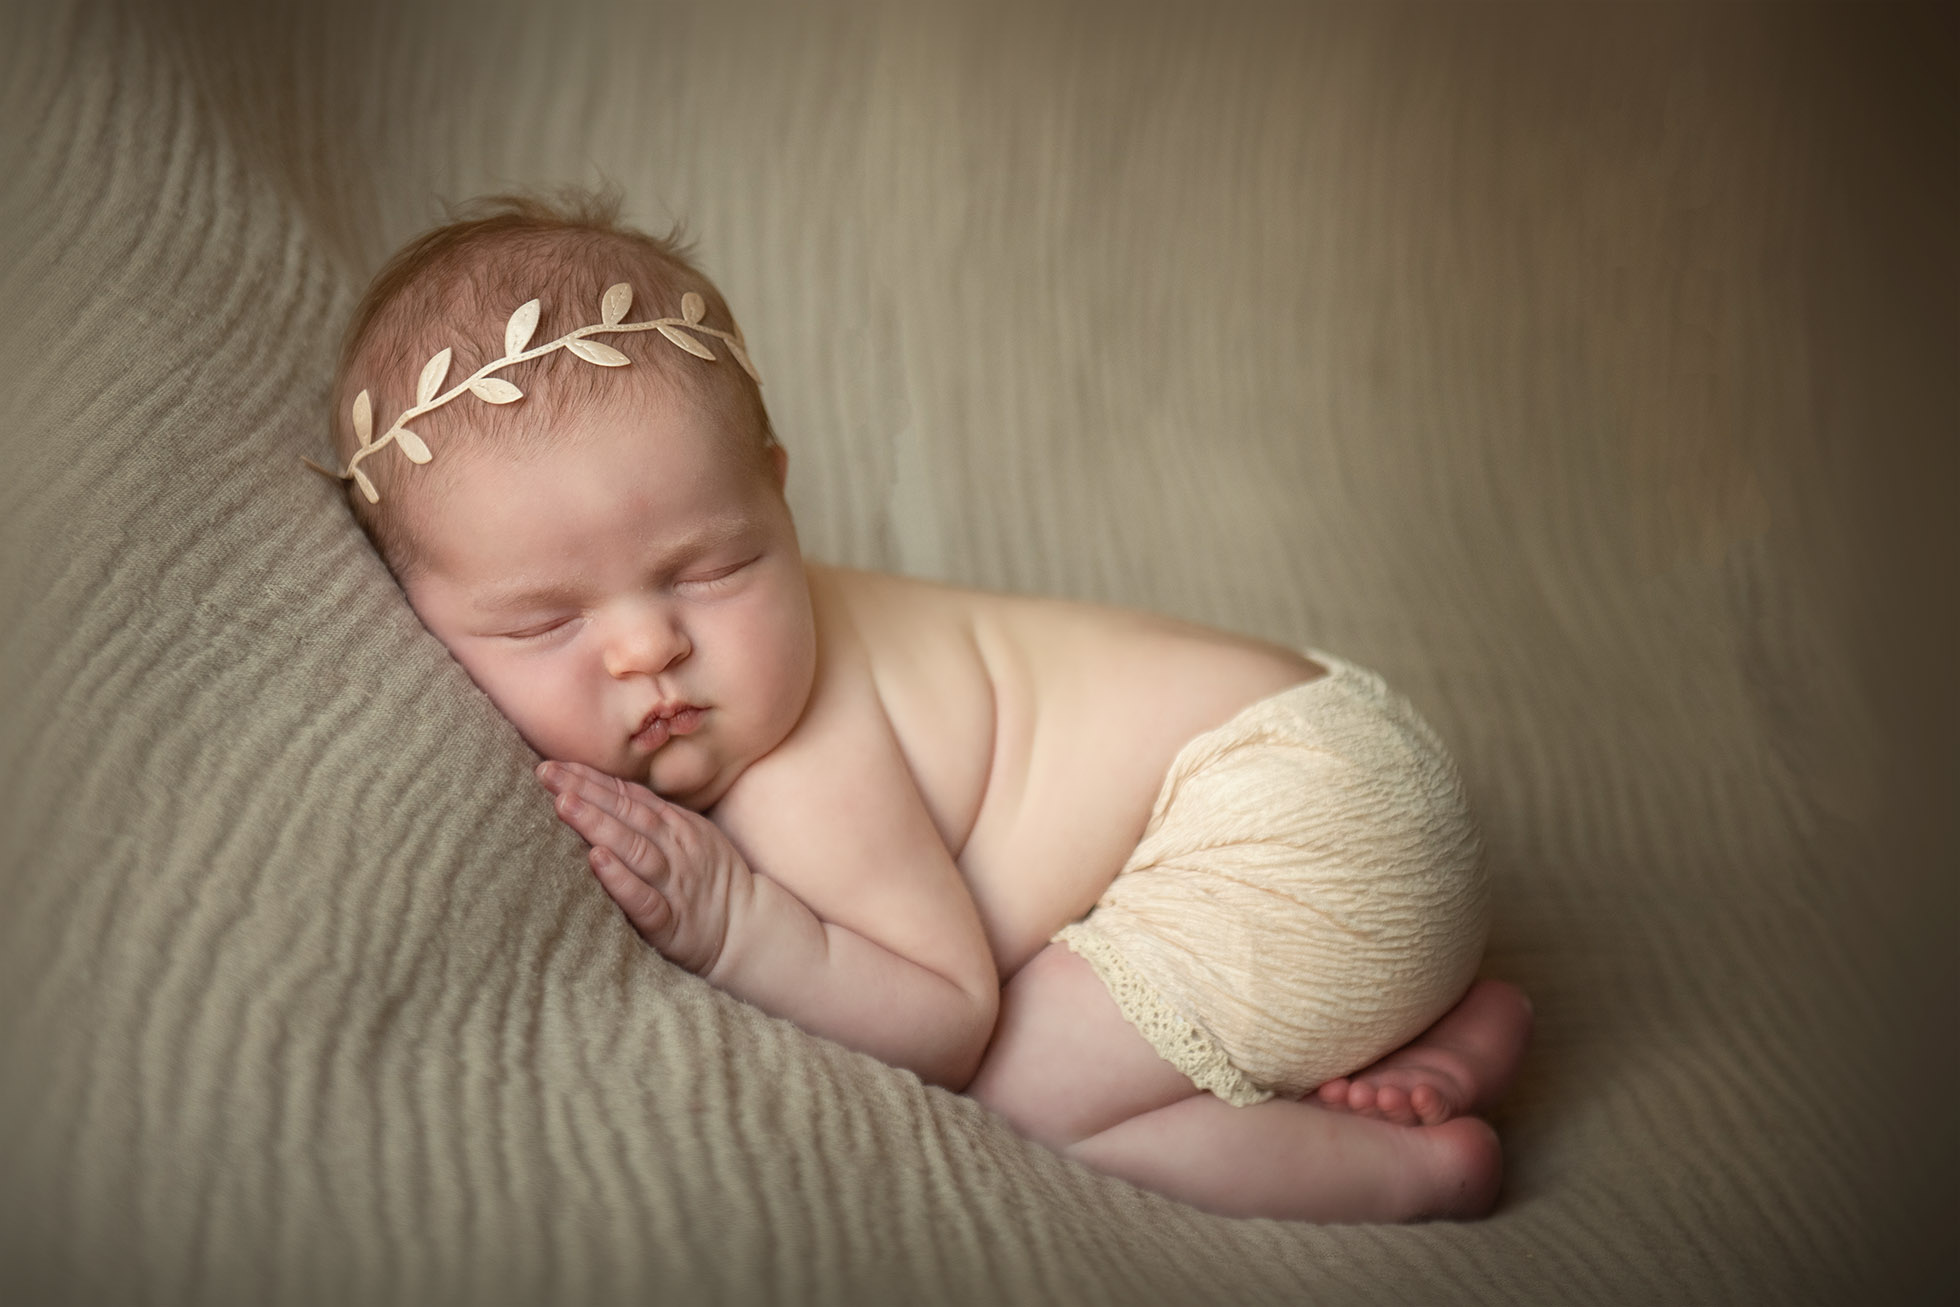 newborn baby girl sleeping on cream blanket knee to elbow pose gold wreath hair band